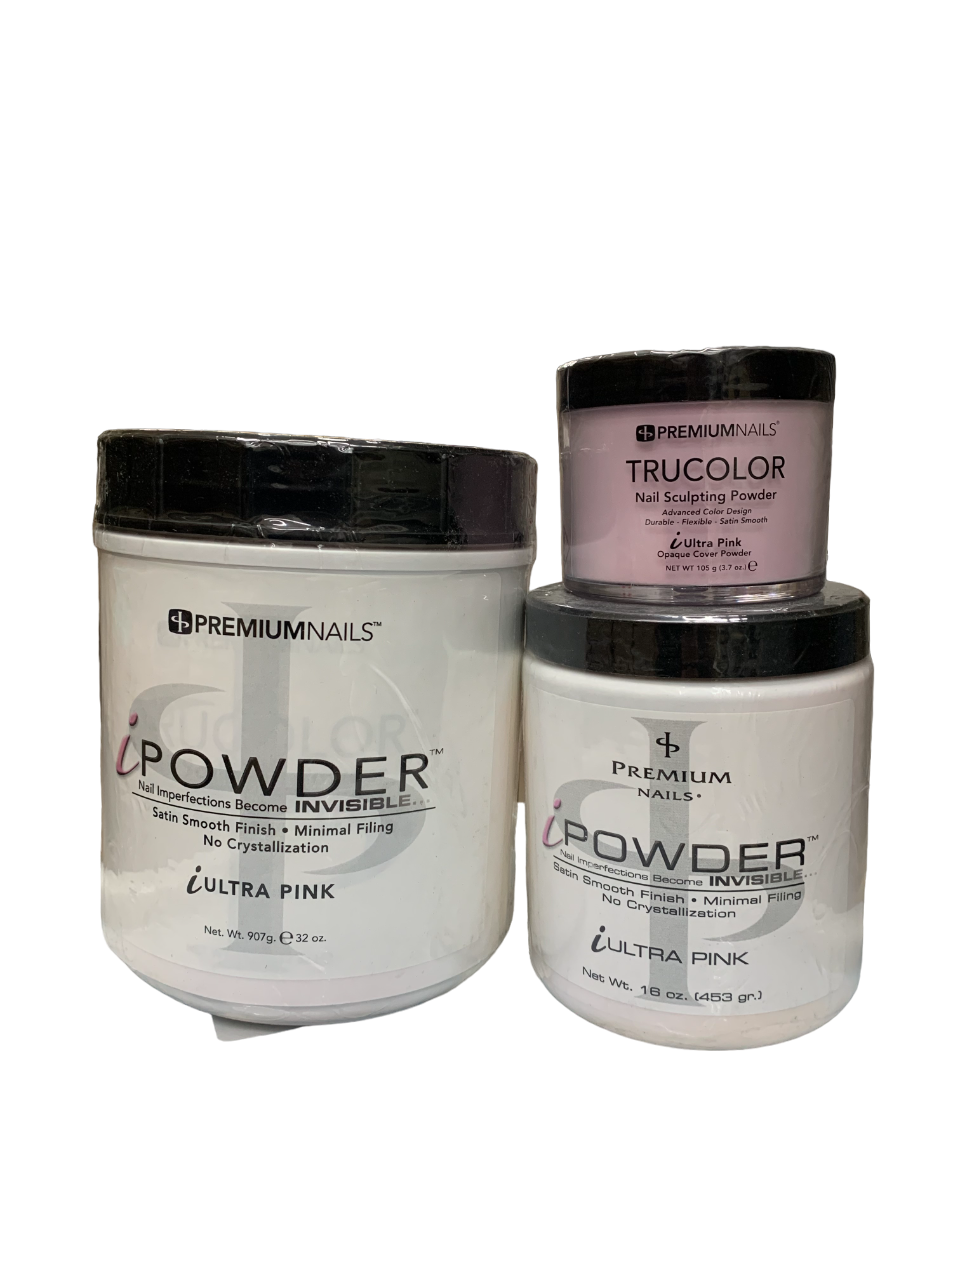 Premiumnails Trucolor Acrylic Powder - TCIUP - iUltra Pink